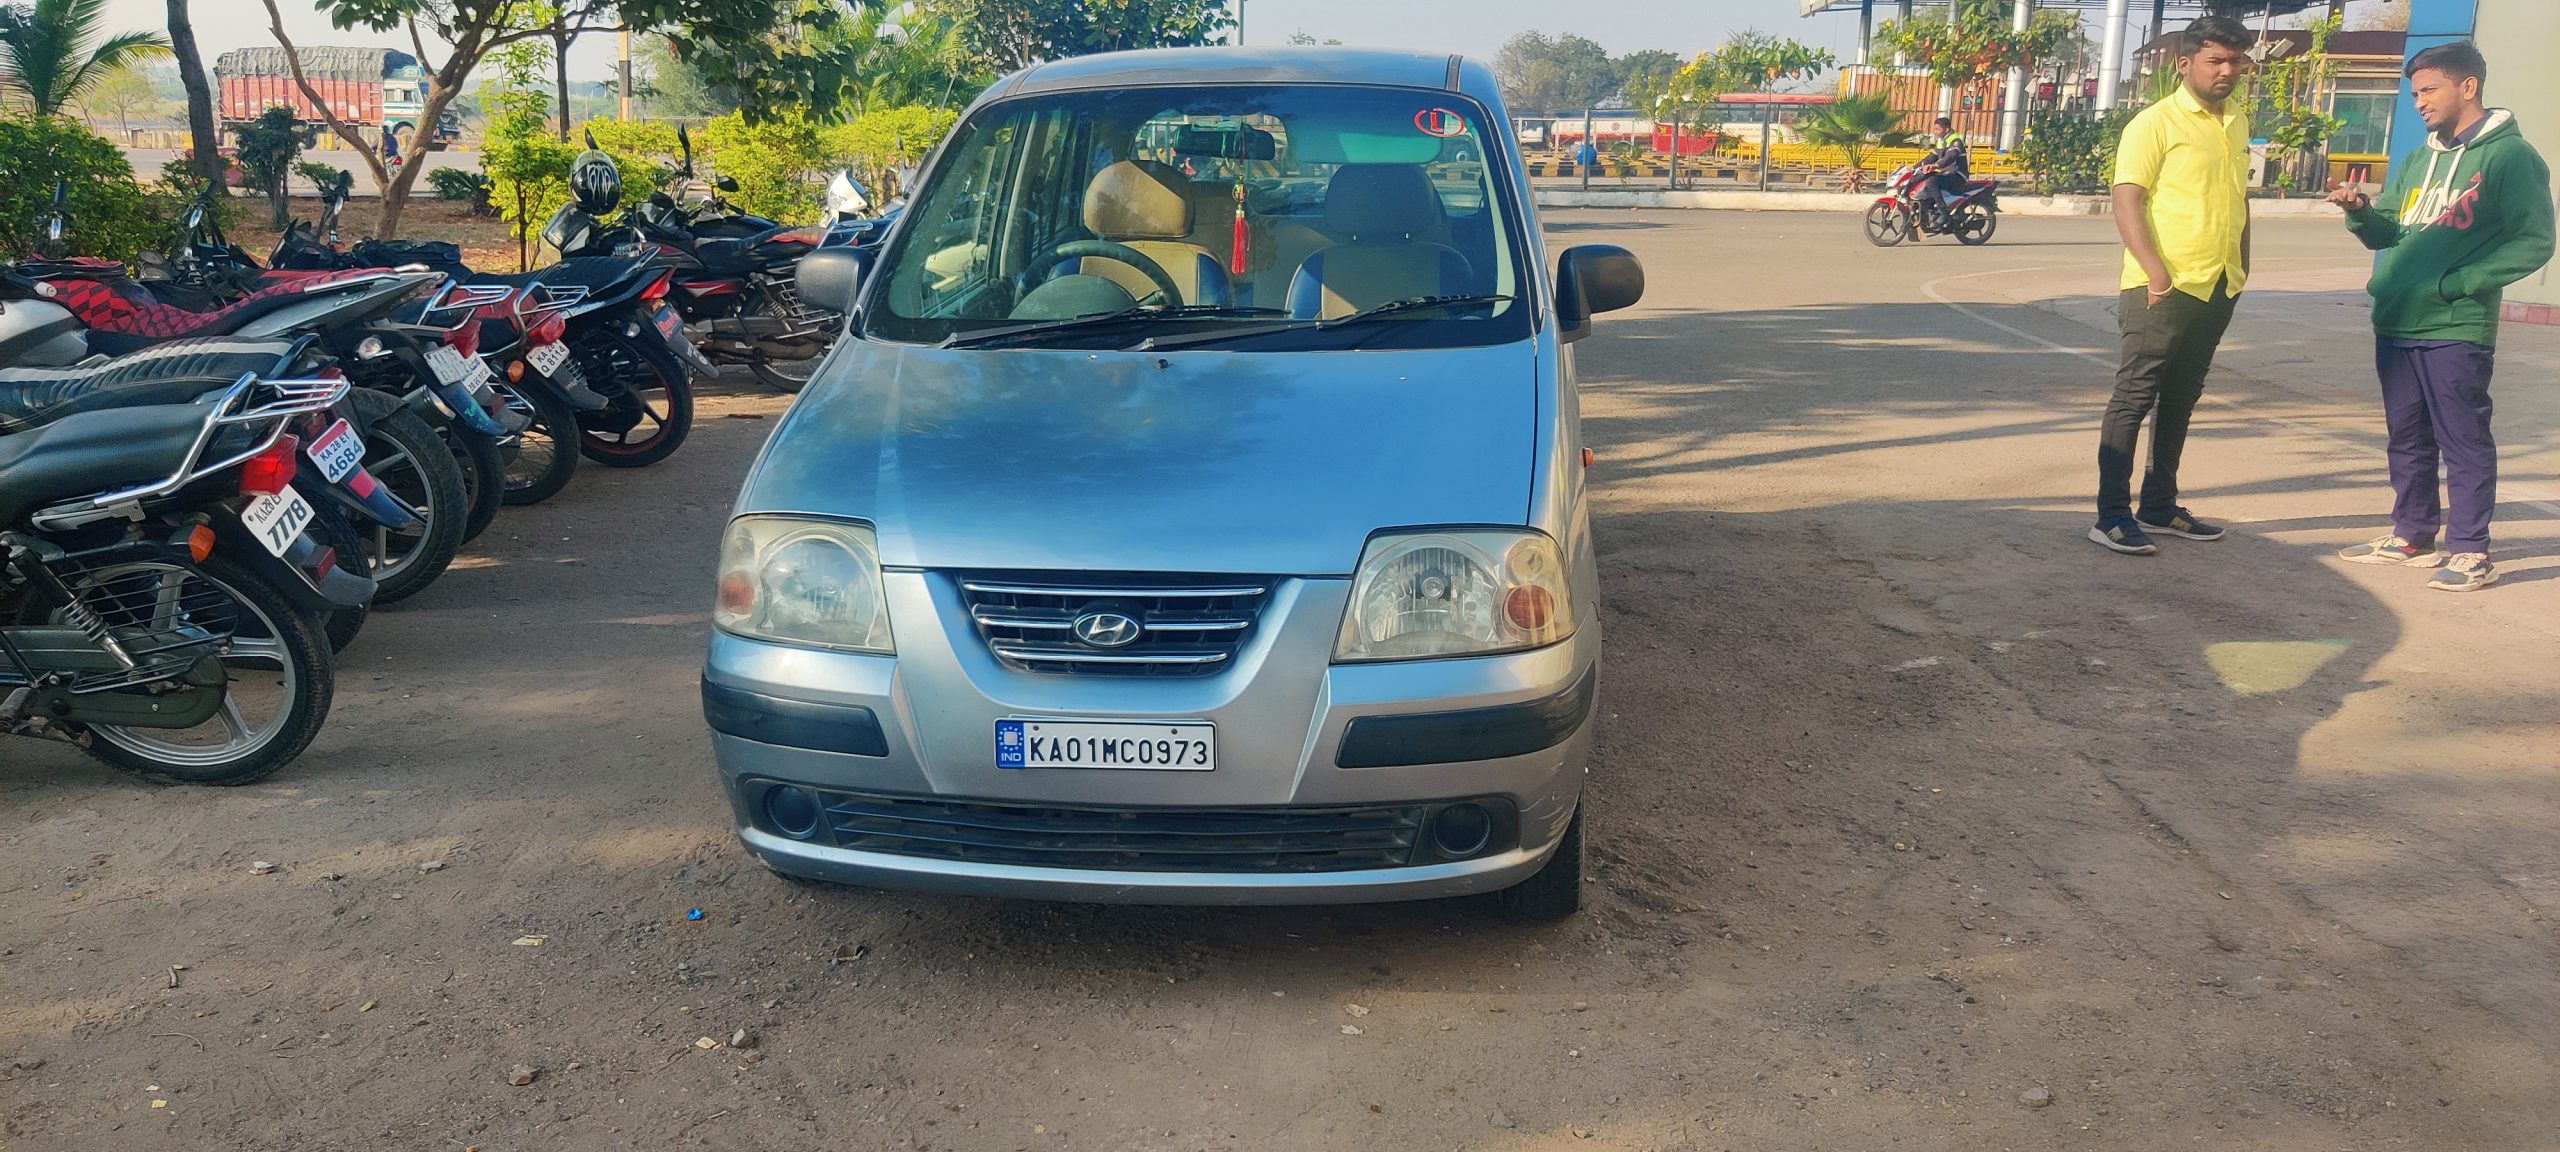 vijayapur-tollgate-staff-on-an-adventure-to-catch-the-car-thief